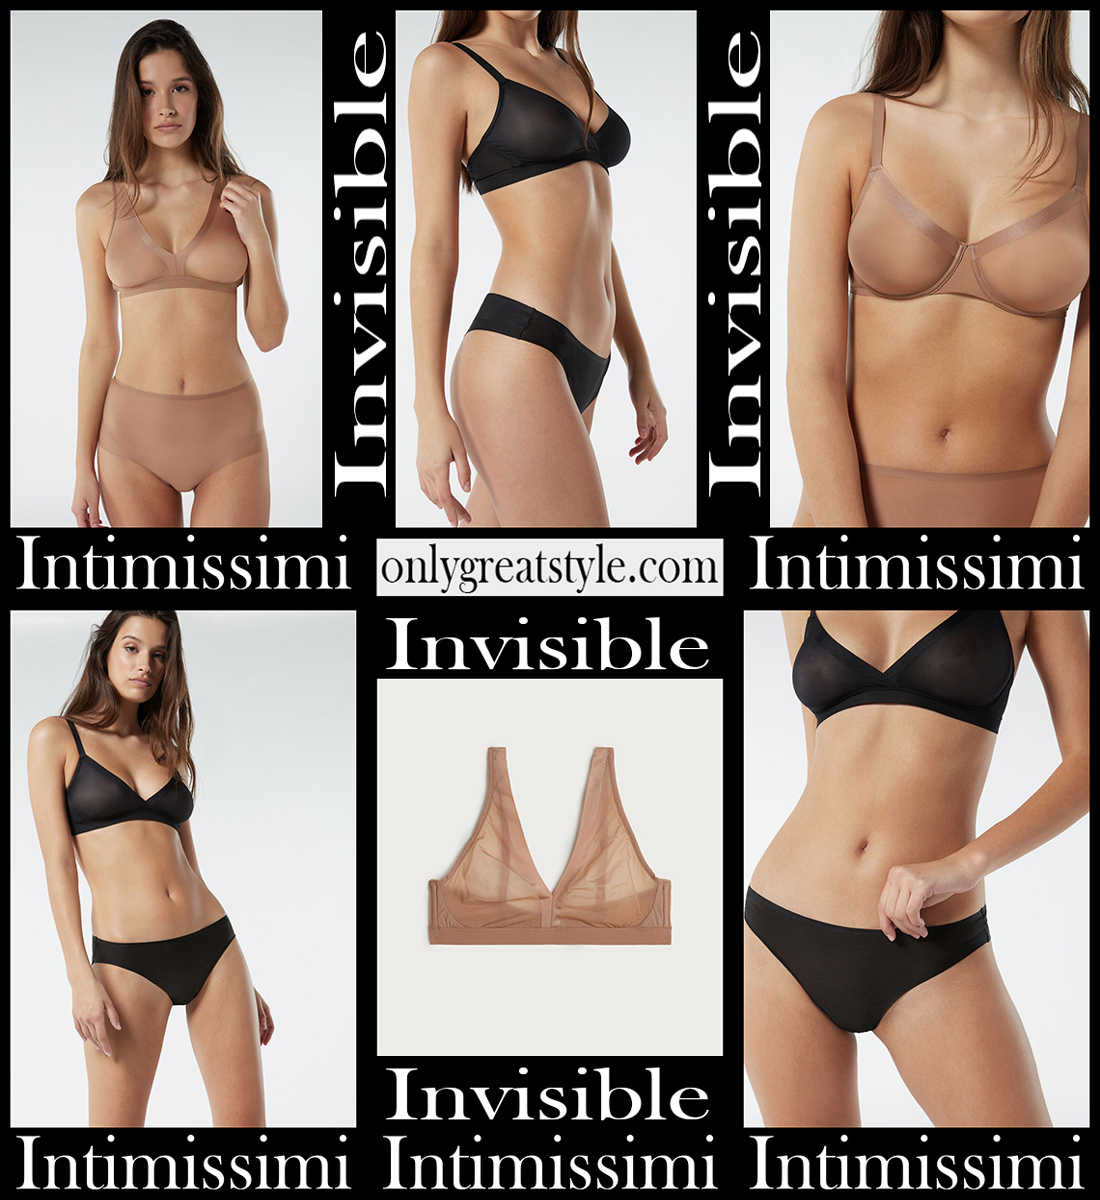 Intimissimi underwear invisible collection accessories